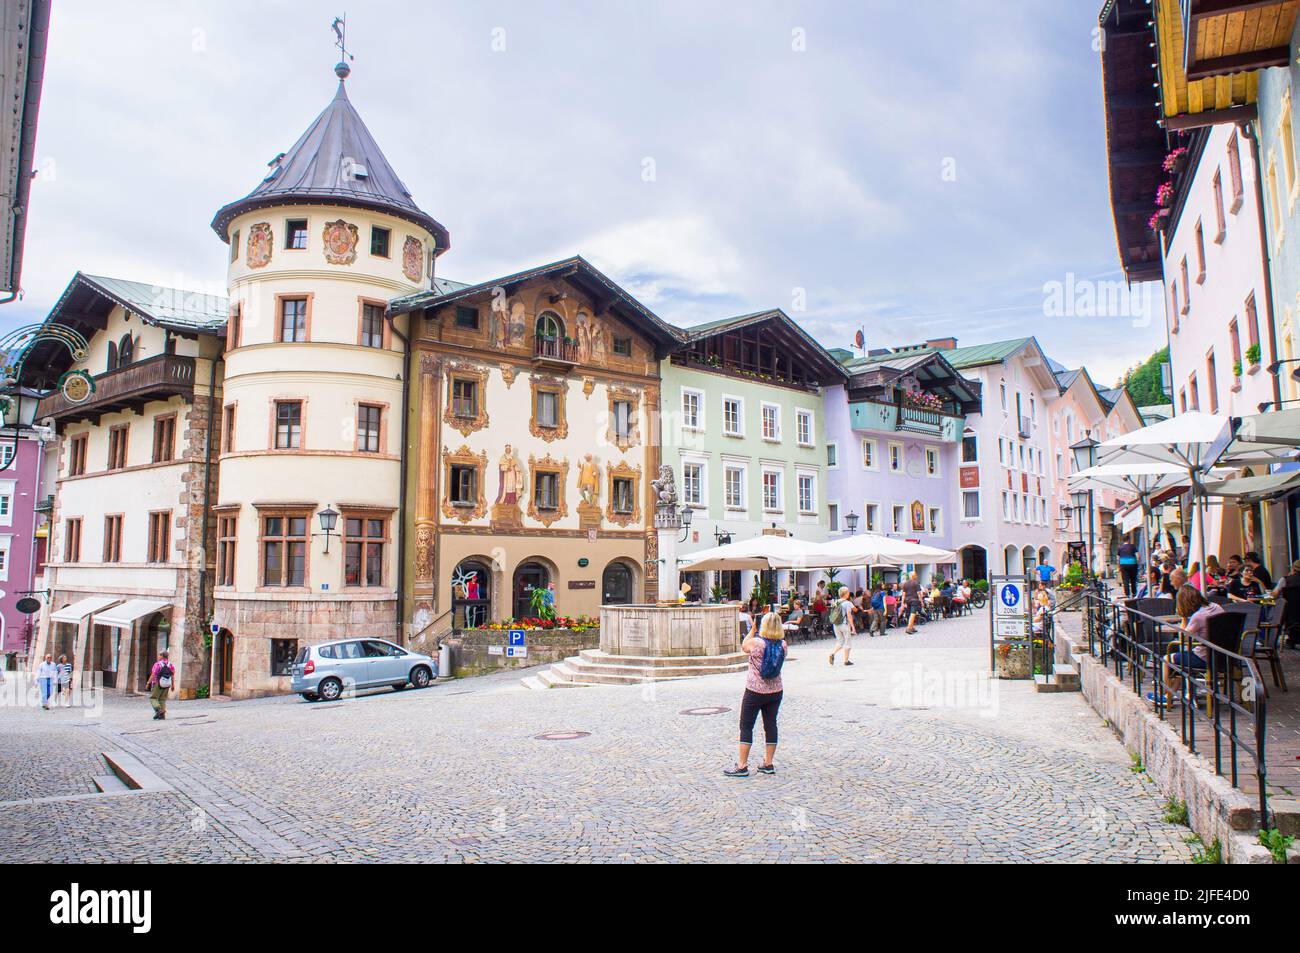 The town of Berchtesgaden, Berchtesgadener Land district, Upper Bavaria, Germany, on June 16, 2022. (CTK Photo/Libor Sojka) Stock Photo